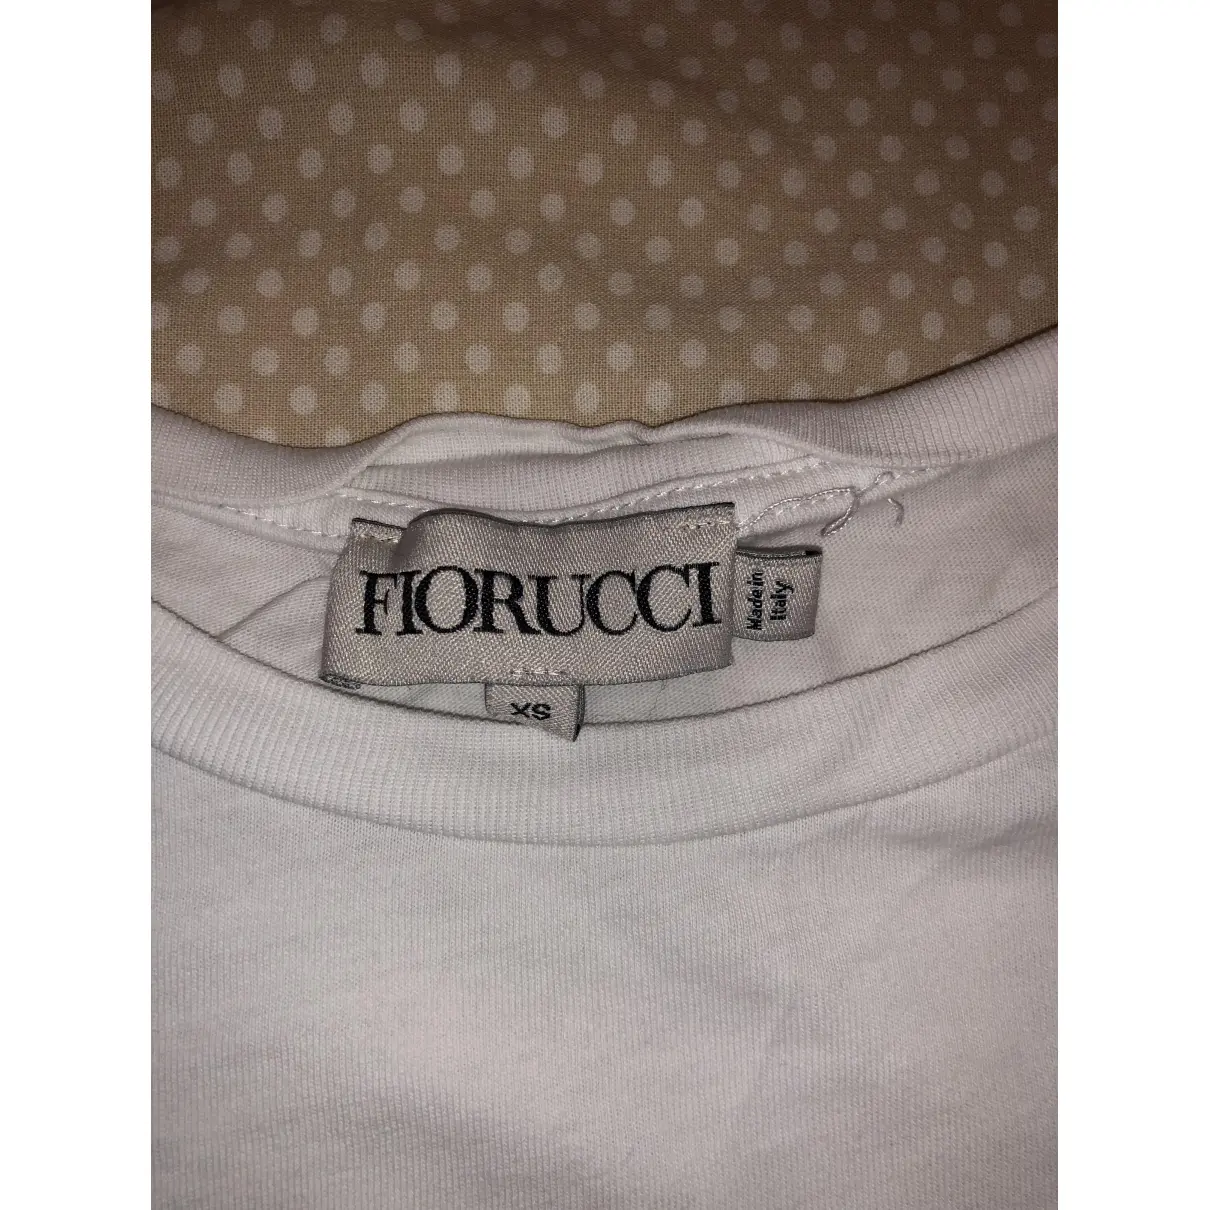 Buy Fiorucci T-shirt online